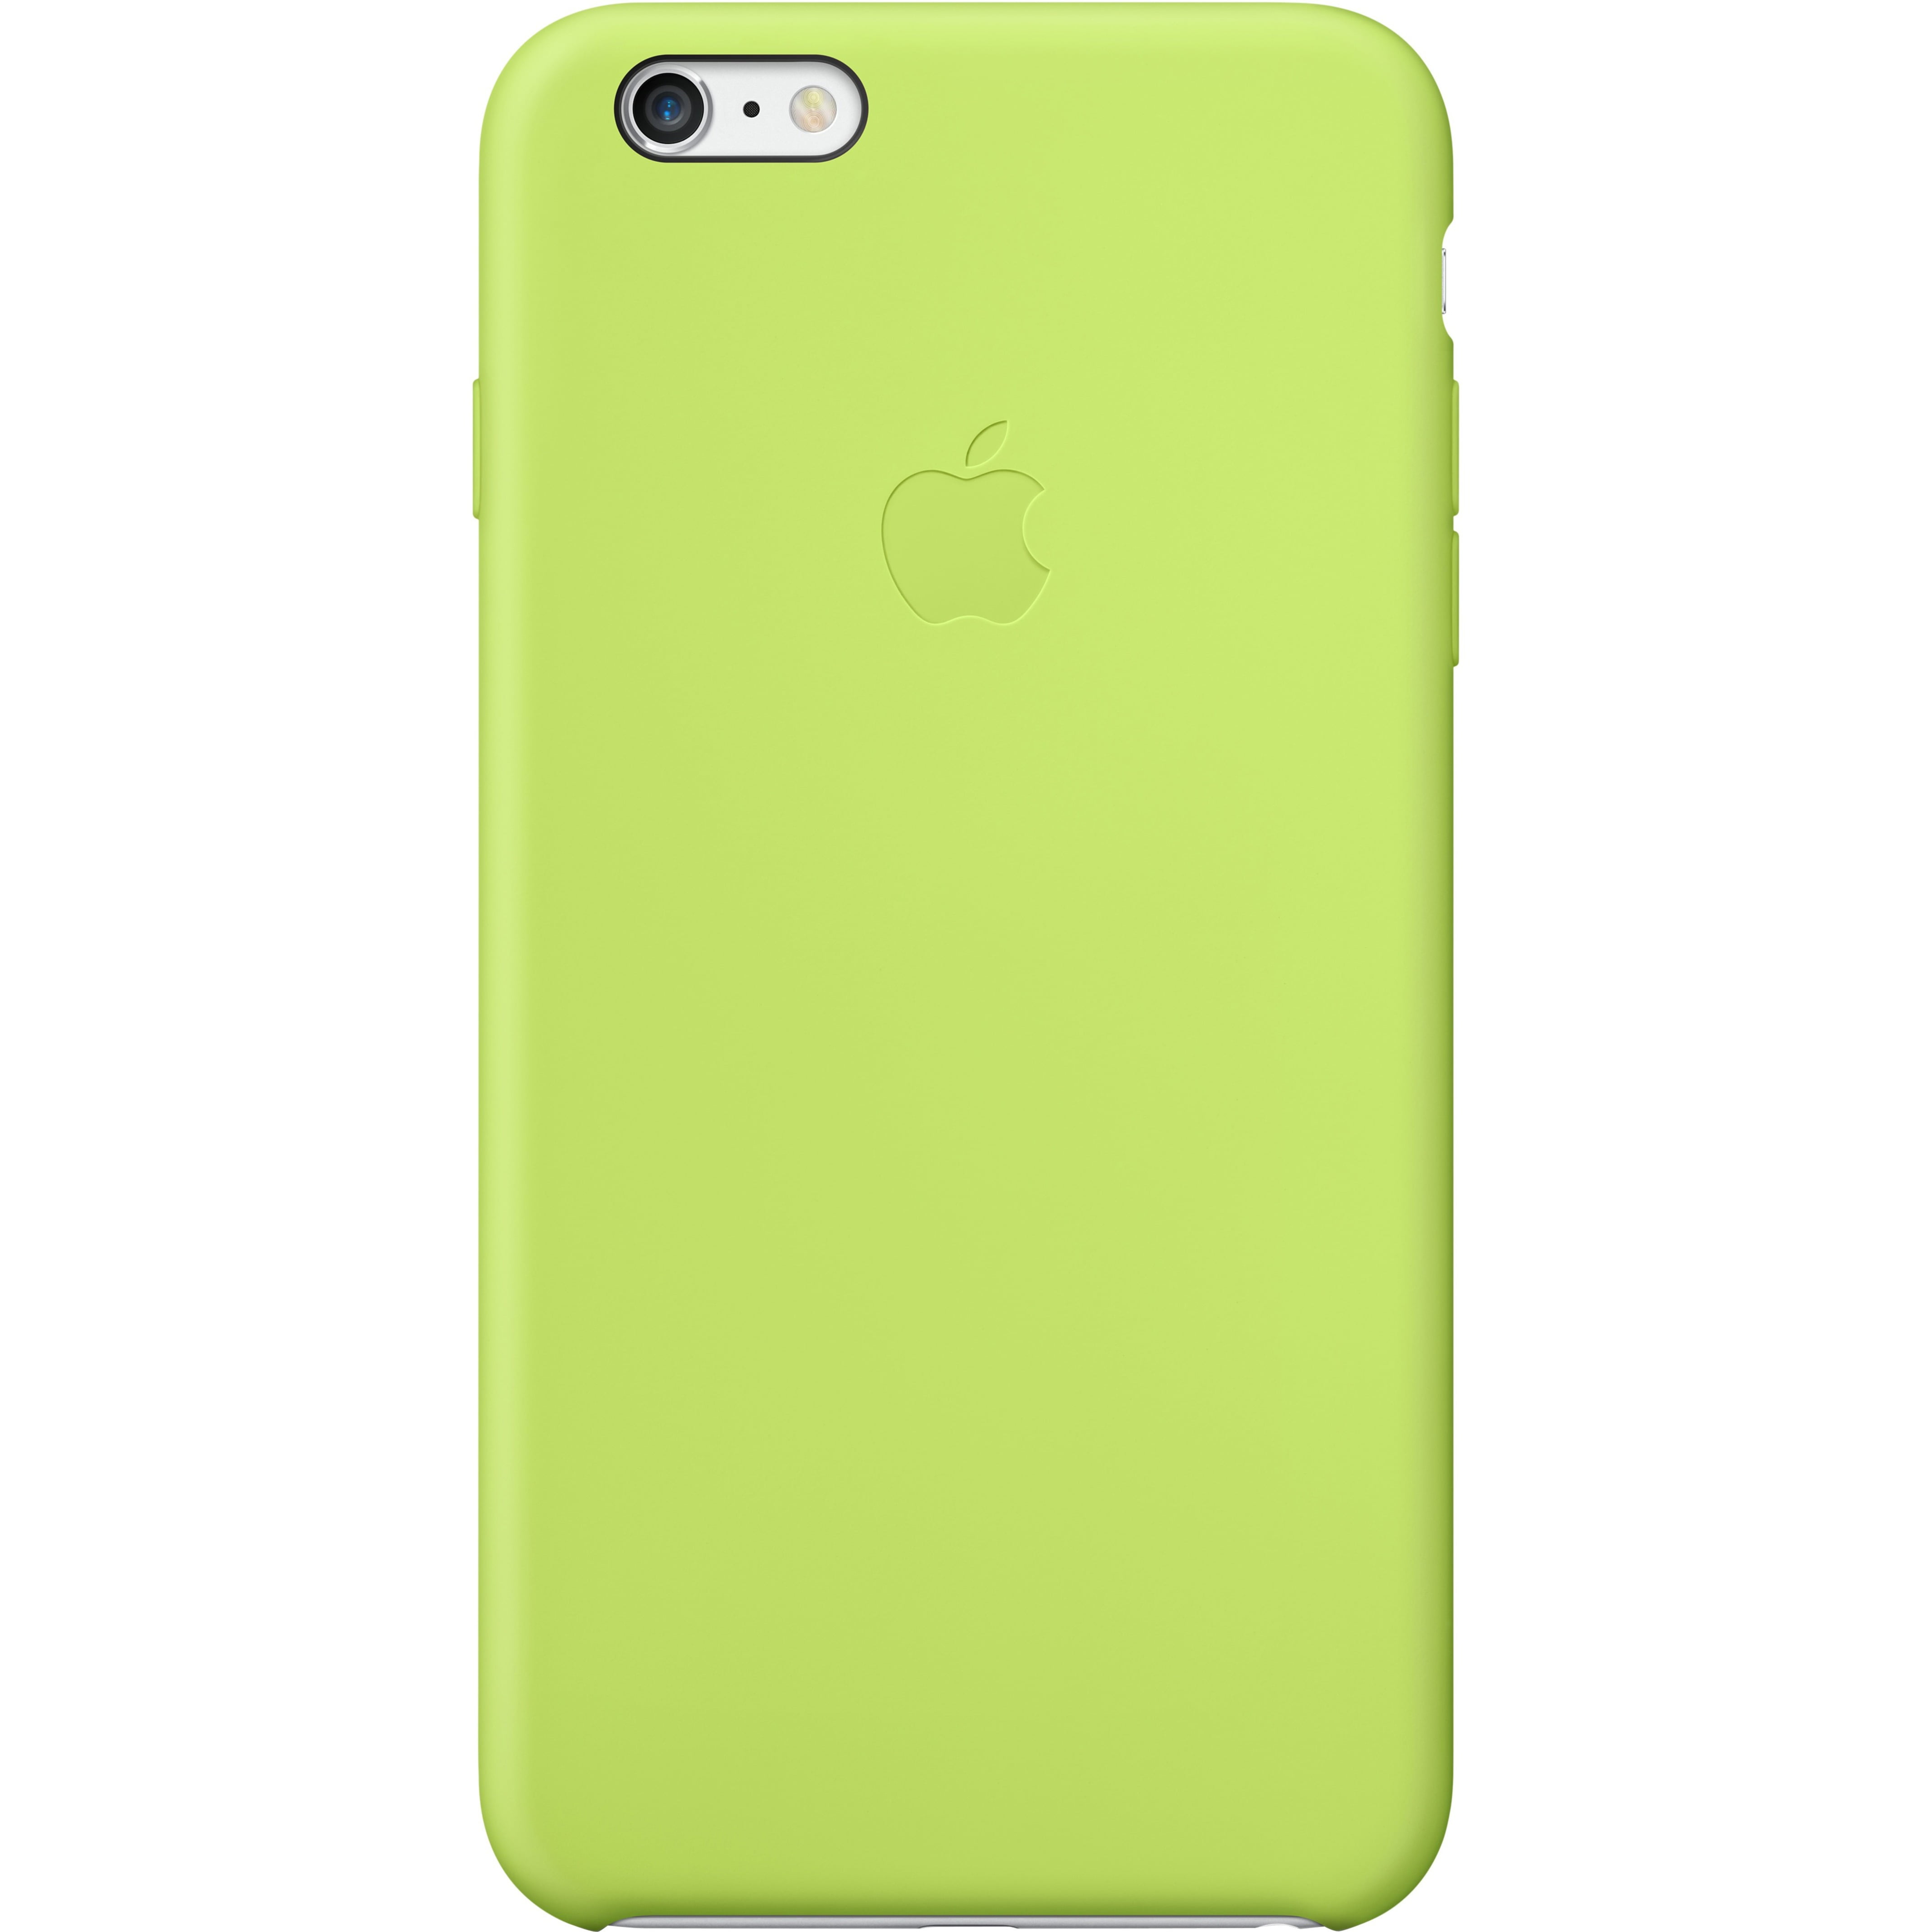 Оригинал чехол для телефона. Чехол для iphone 6s Plus Apple оригинал. Iphone 6s Silicone Case Green. Чехол на айфон 7 Plus зеленый. Чехол накладка силикон Silicone Case iphone 6/6s салатовый аналог.